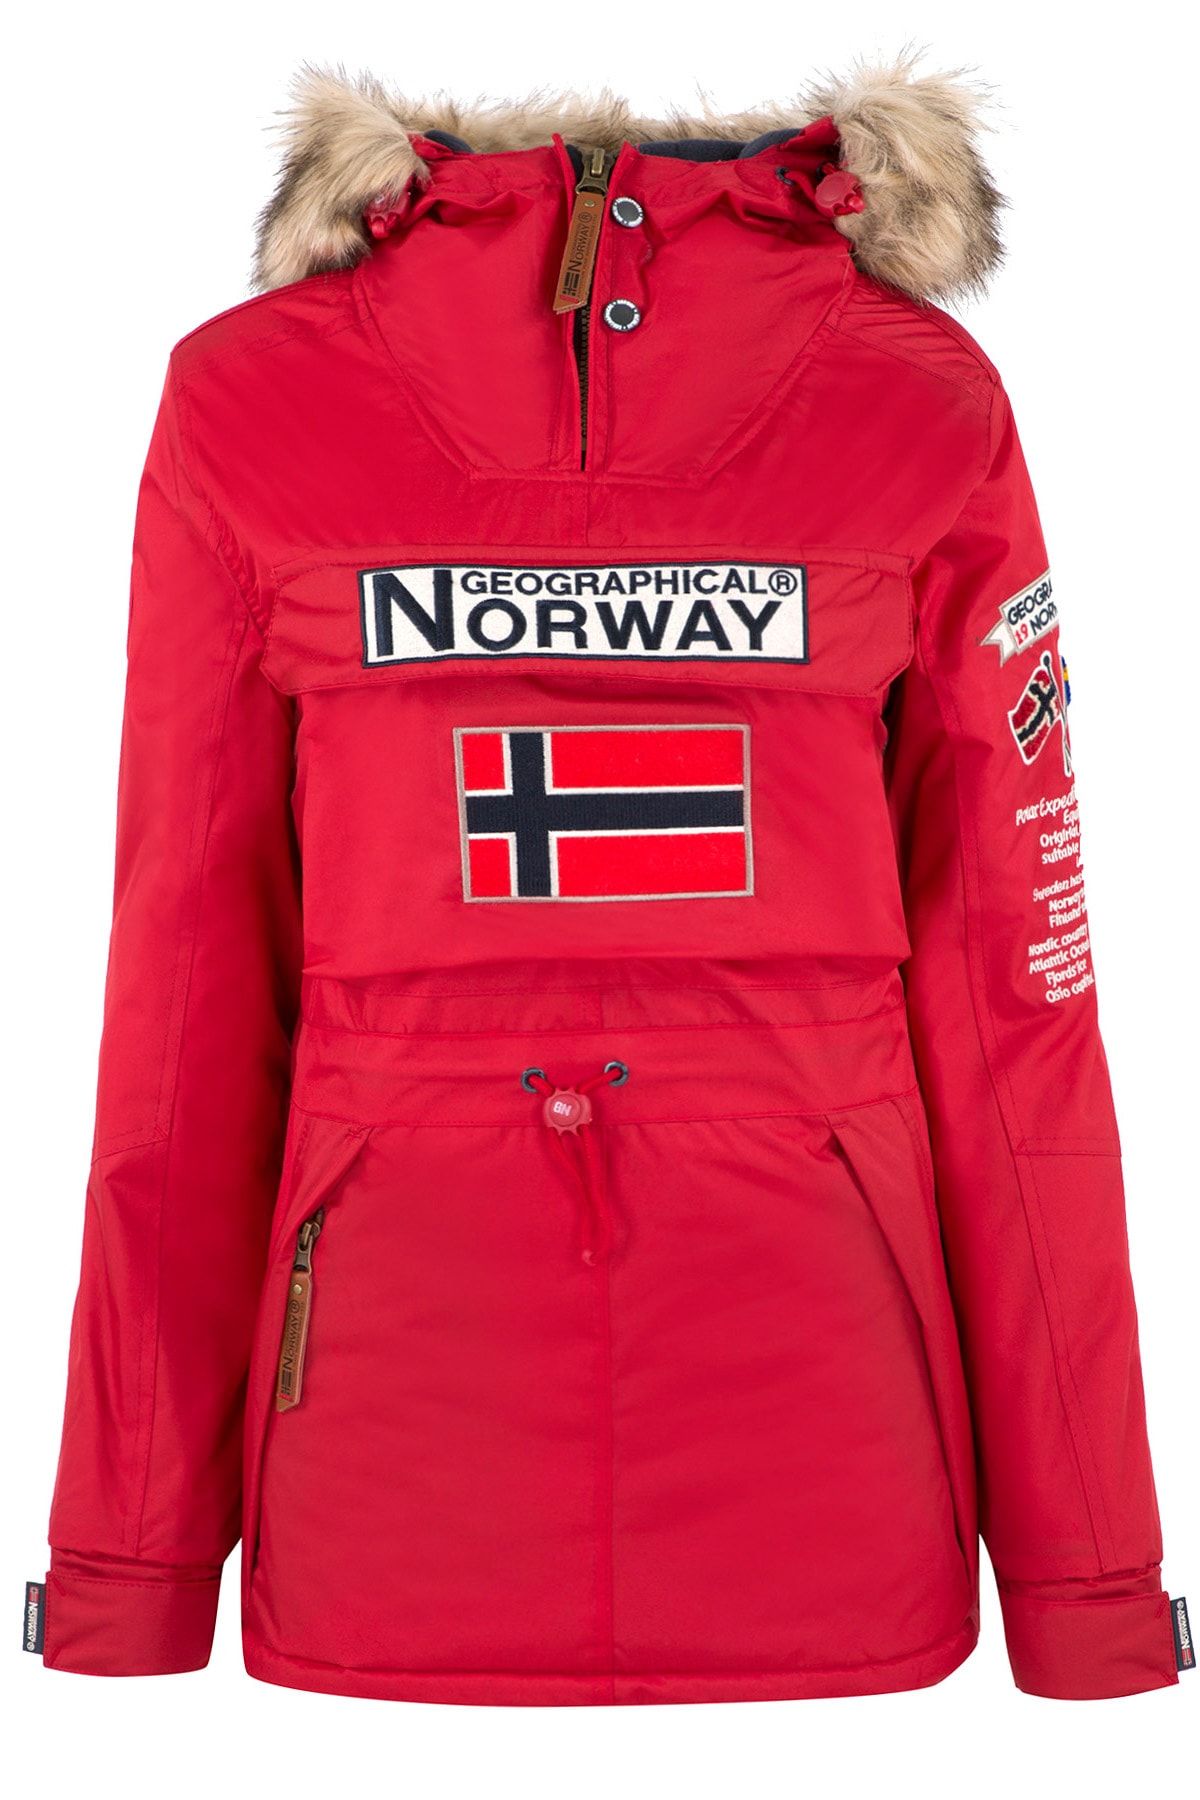 Norway Geographical Kadın Kırmızı Parka BOOMERA